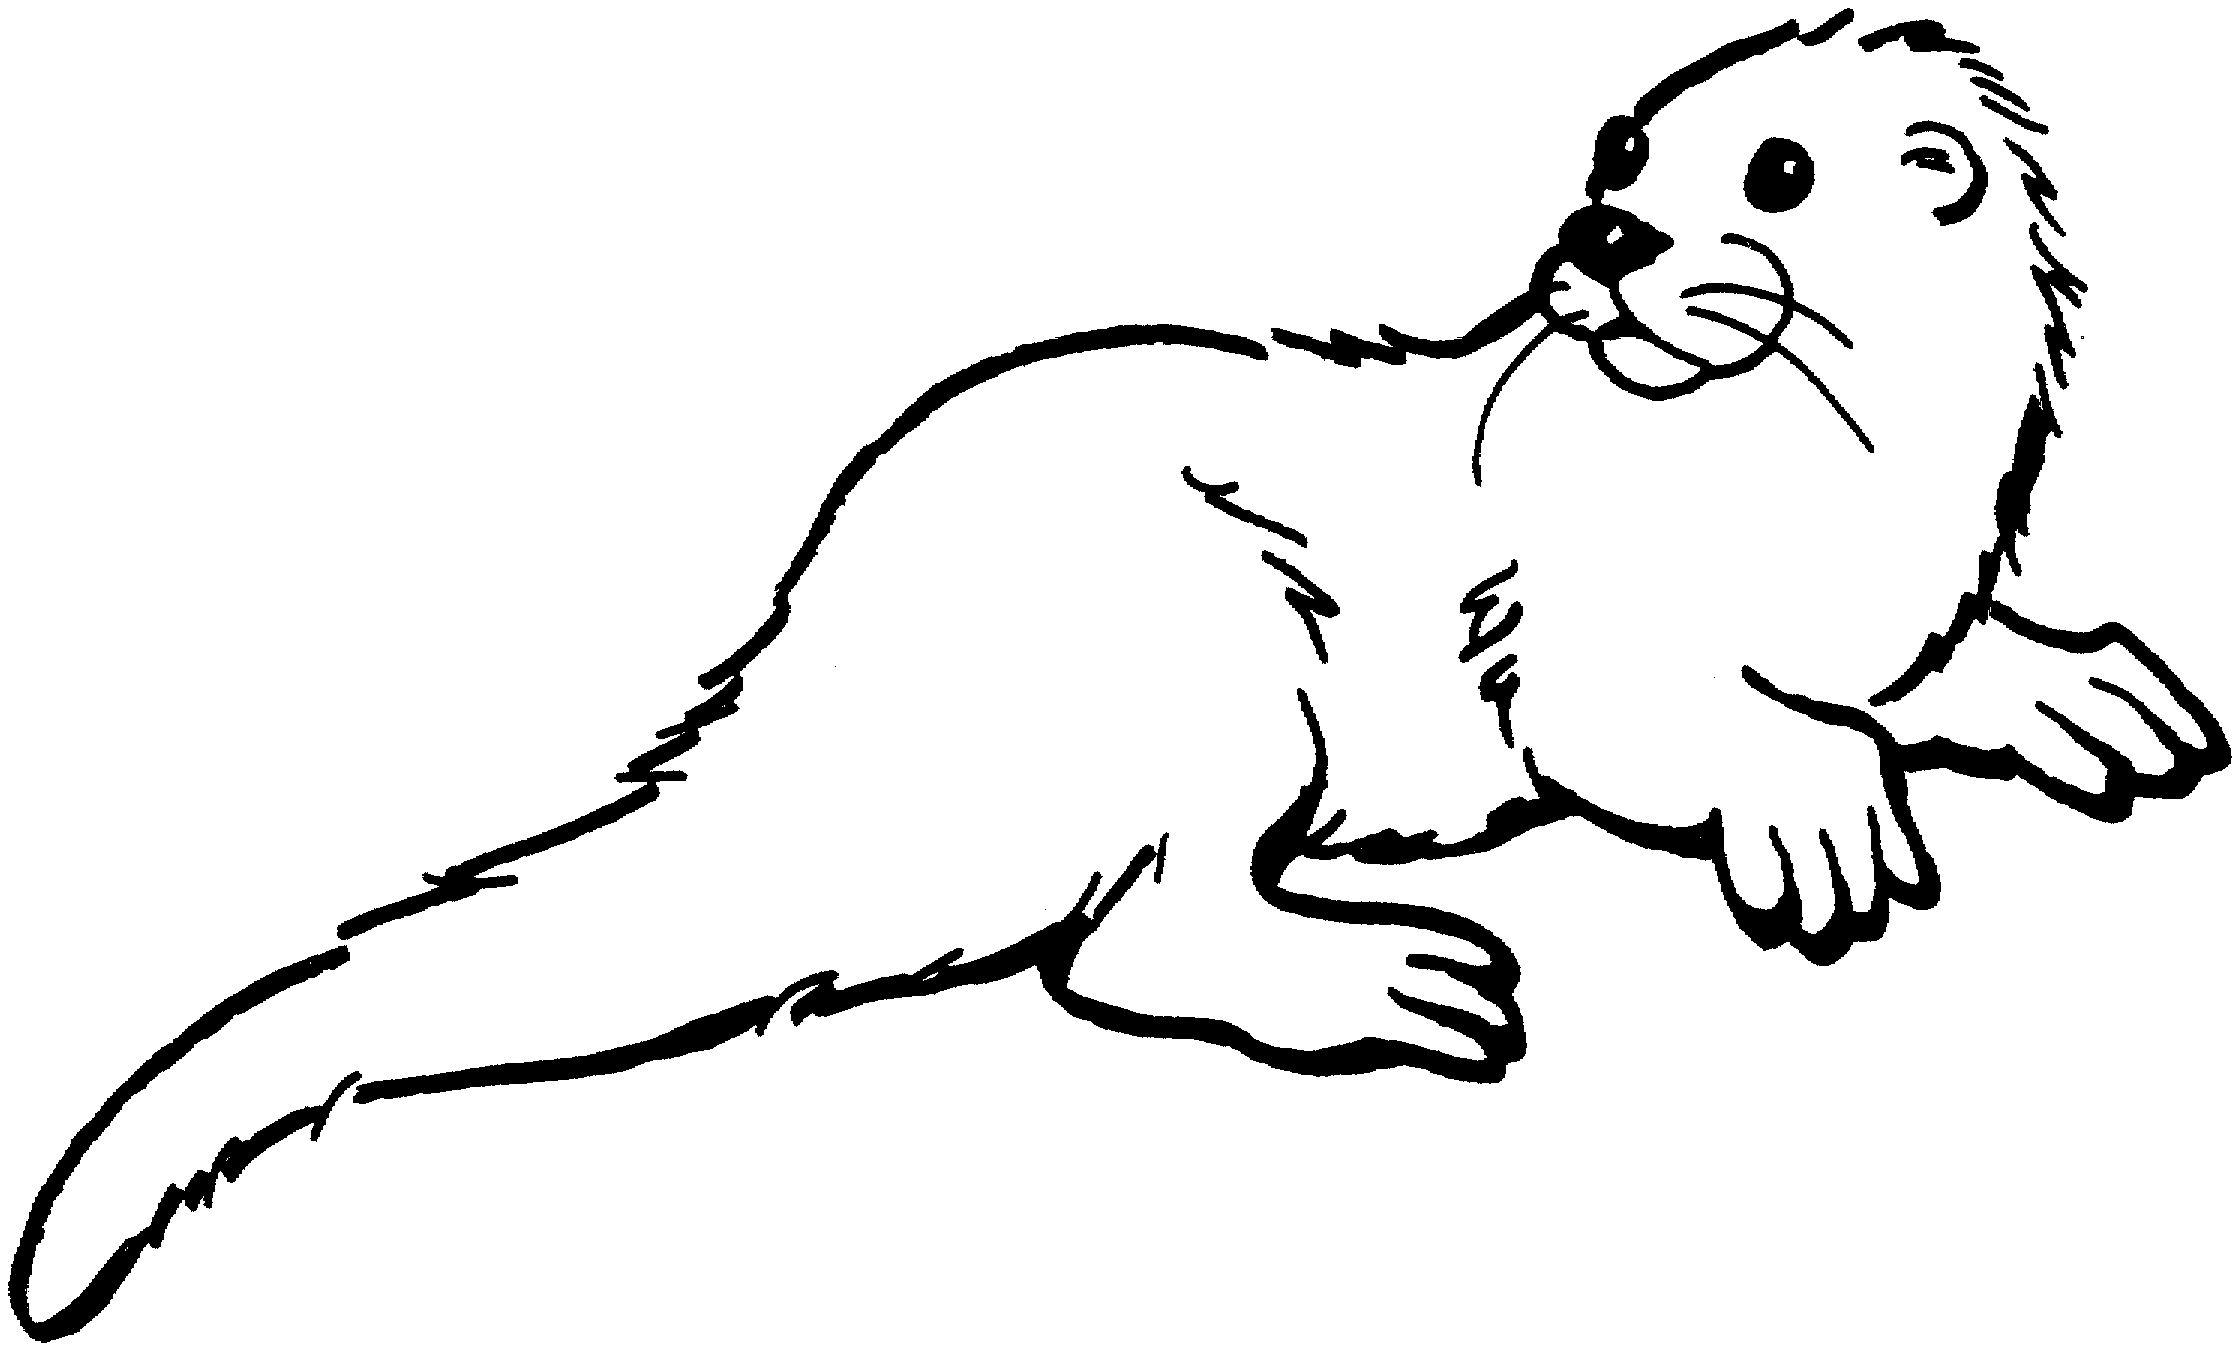 Otter clipart black and white